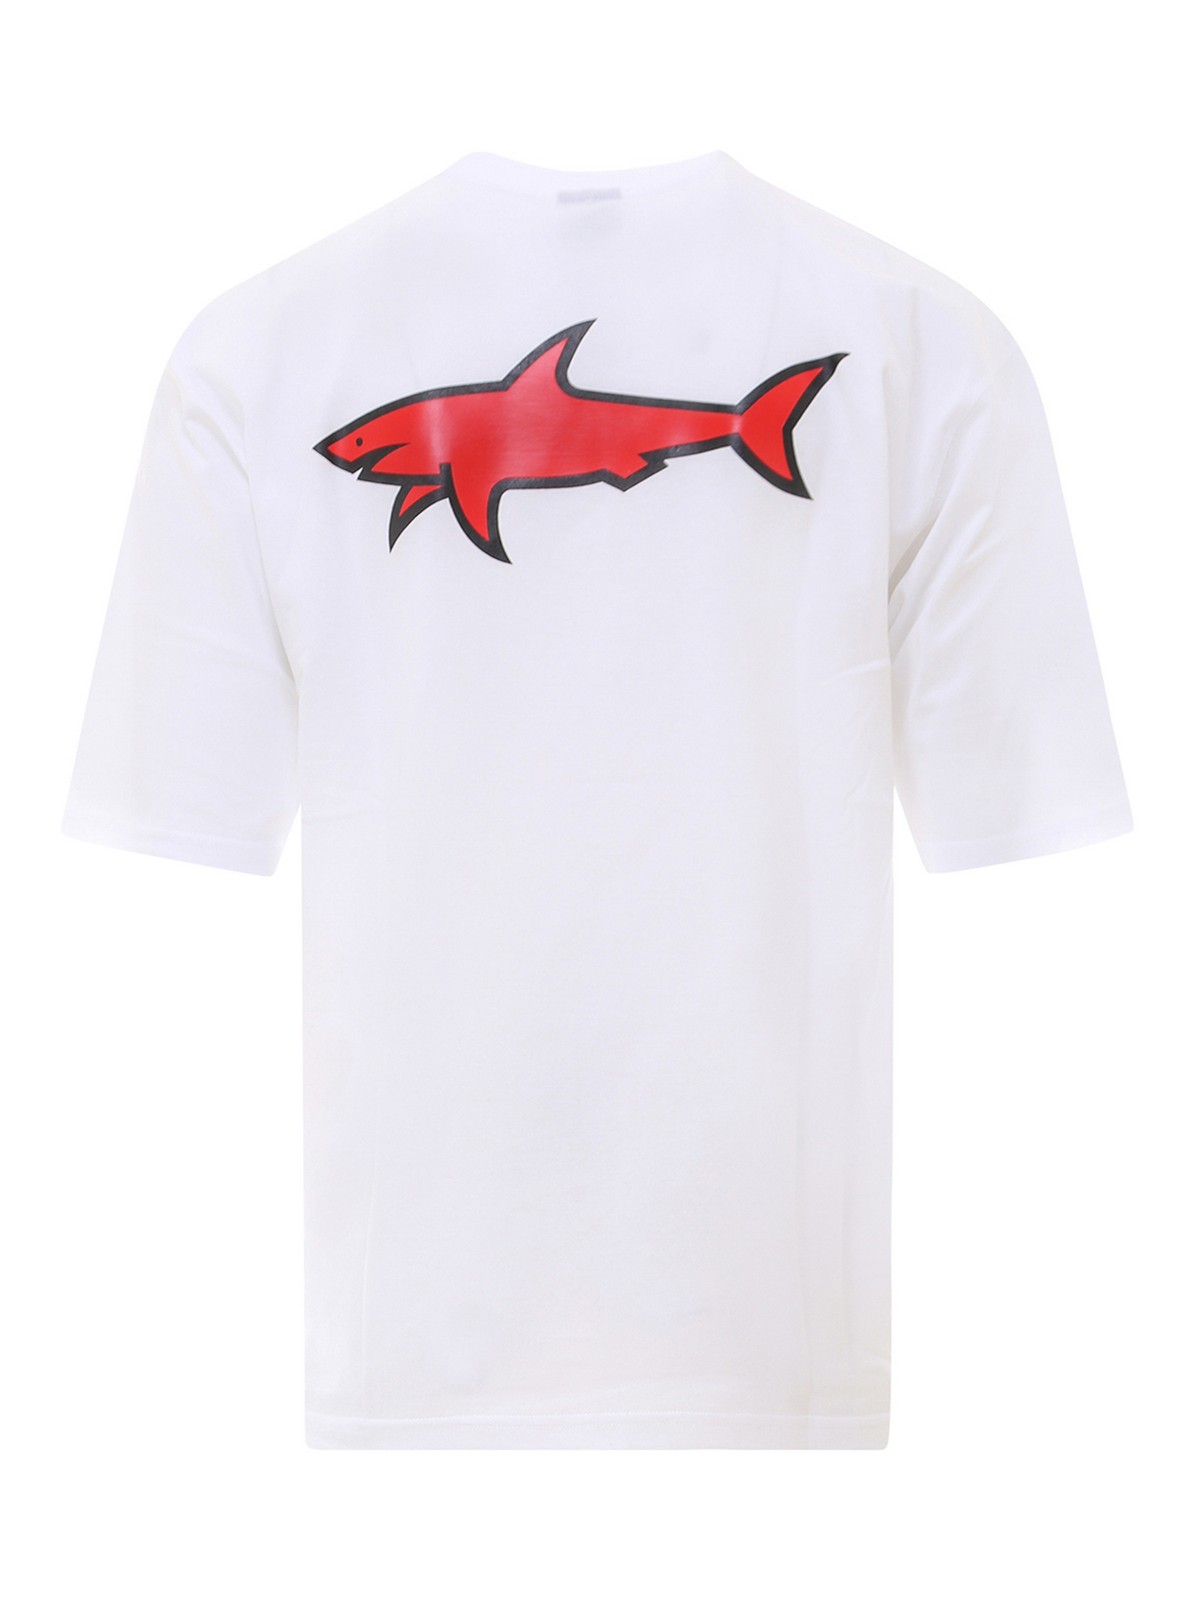 verwijderen boeket amplitude T-shirts Paul & Shark - Logo T-shirt - 21411011010 | Shop online at iKRIX